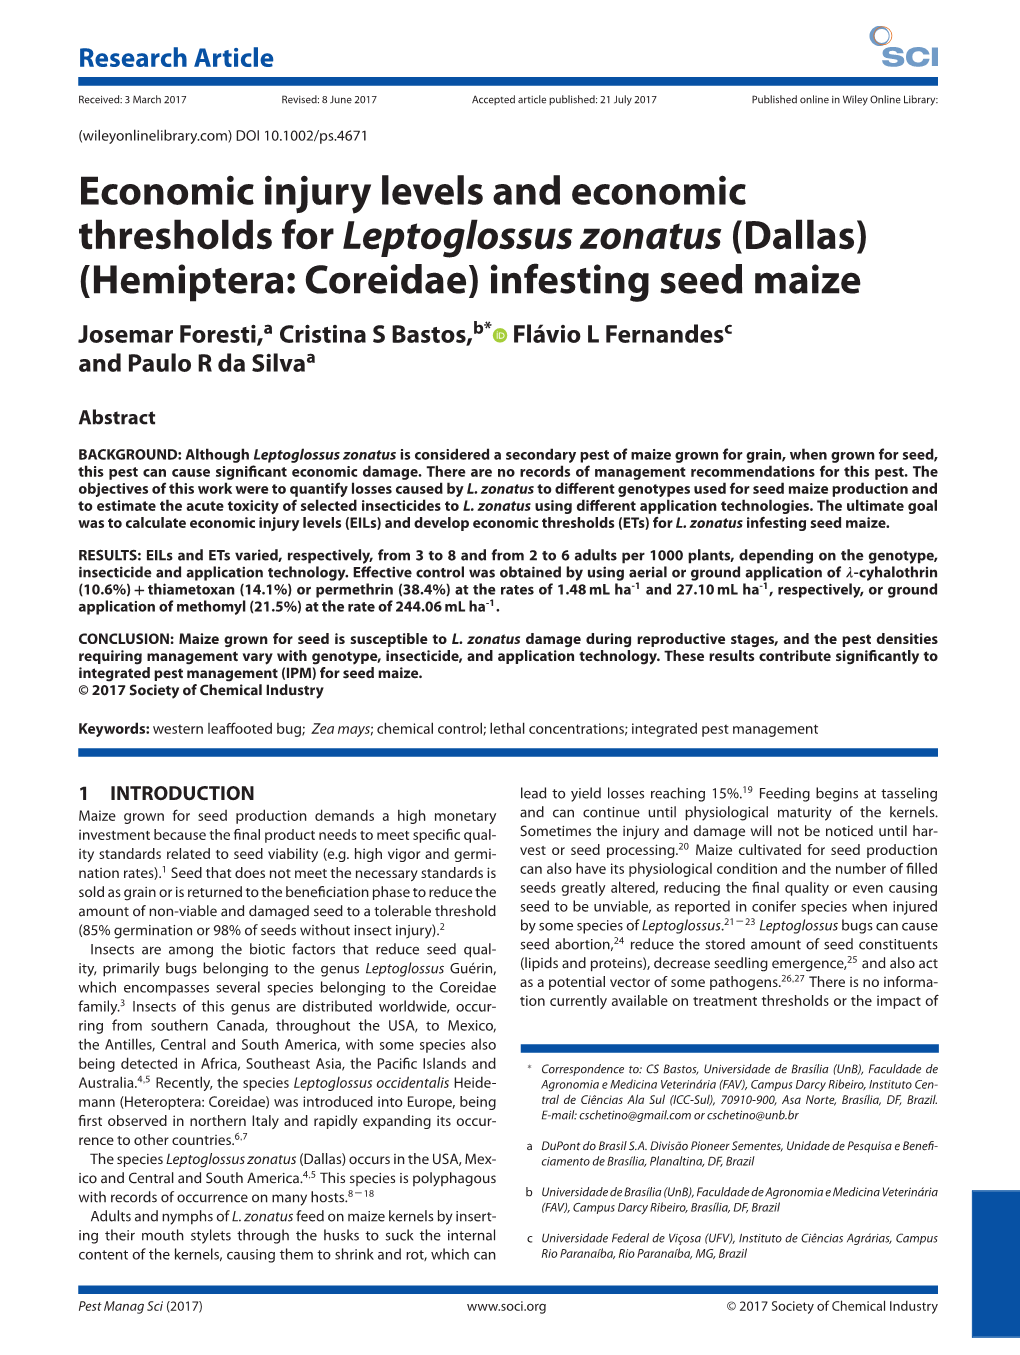 Economic Injury Levels and Economic Thresholds for Leptoglossus Zonatus (Dallas) (Hemiptera: Coreidae) Infesting Seed Maize